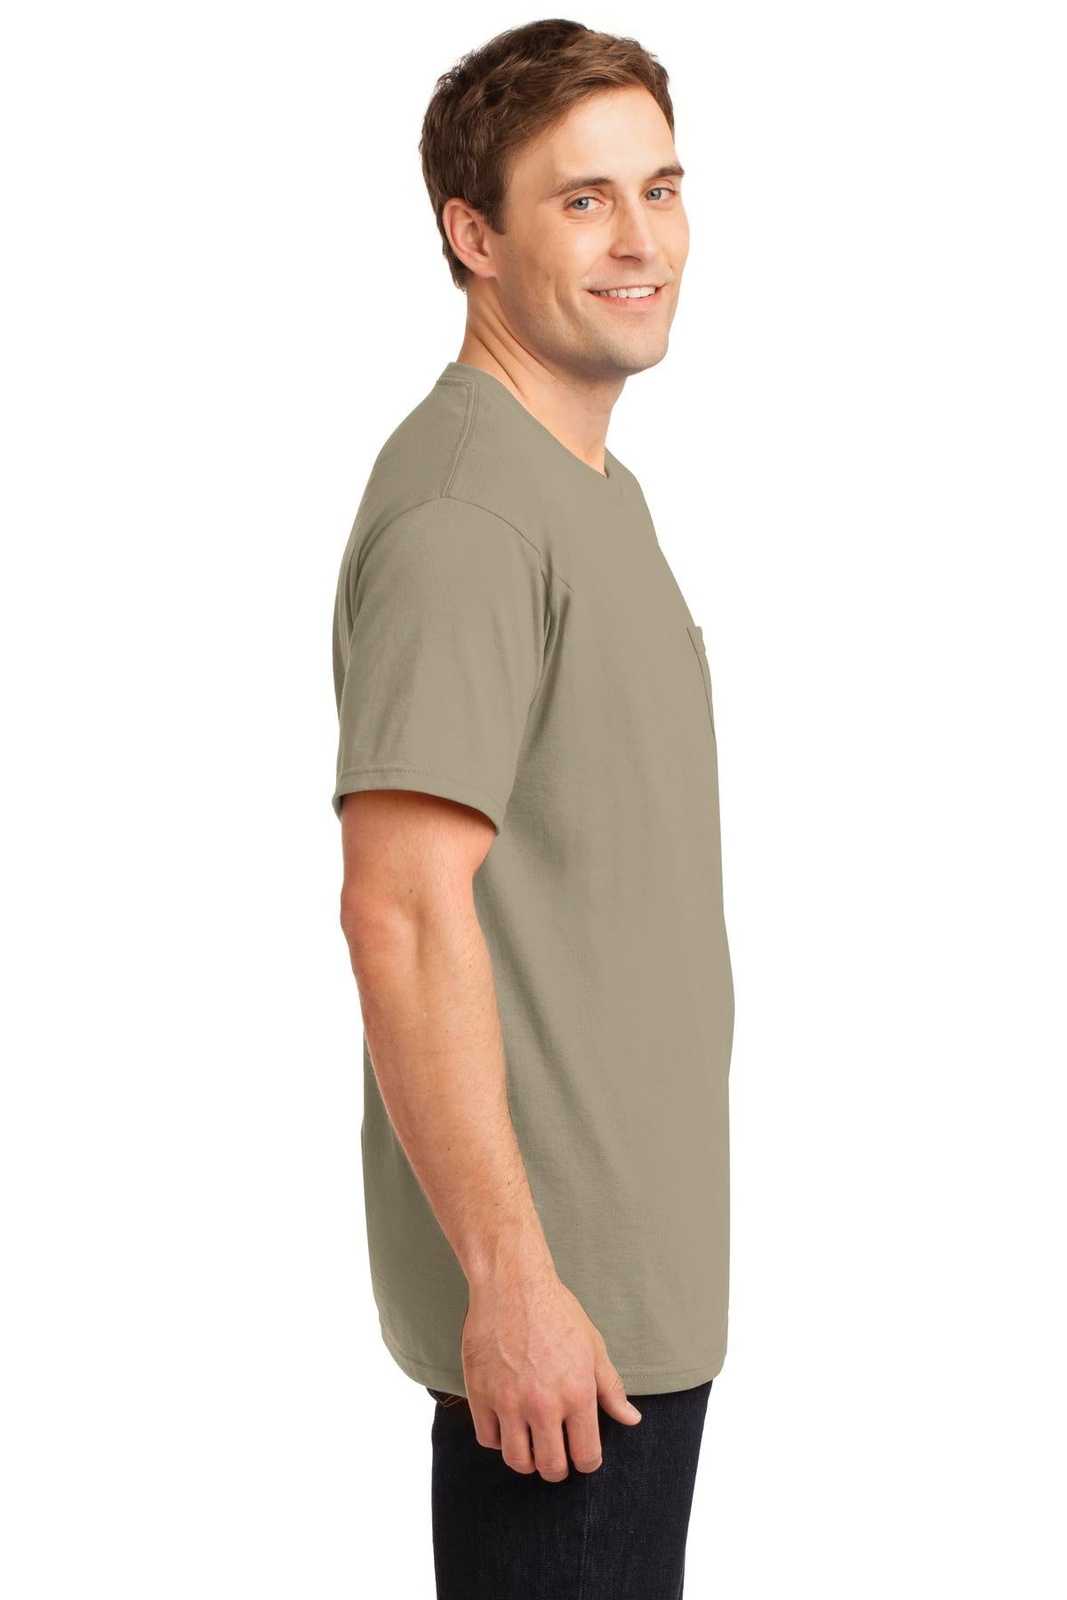 Jerzees 29MP Dri-Power 50/50 Cotton/Poly Pocket T-Shirt - Khaki - HIT a Double